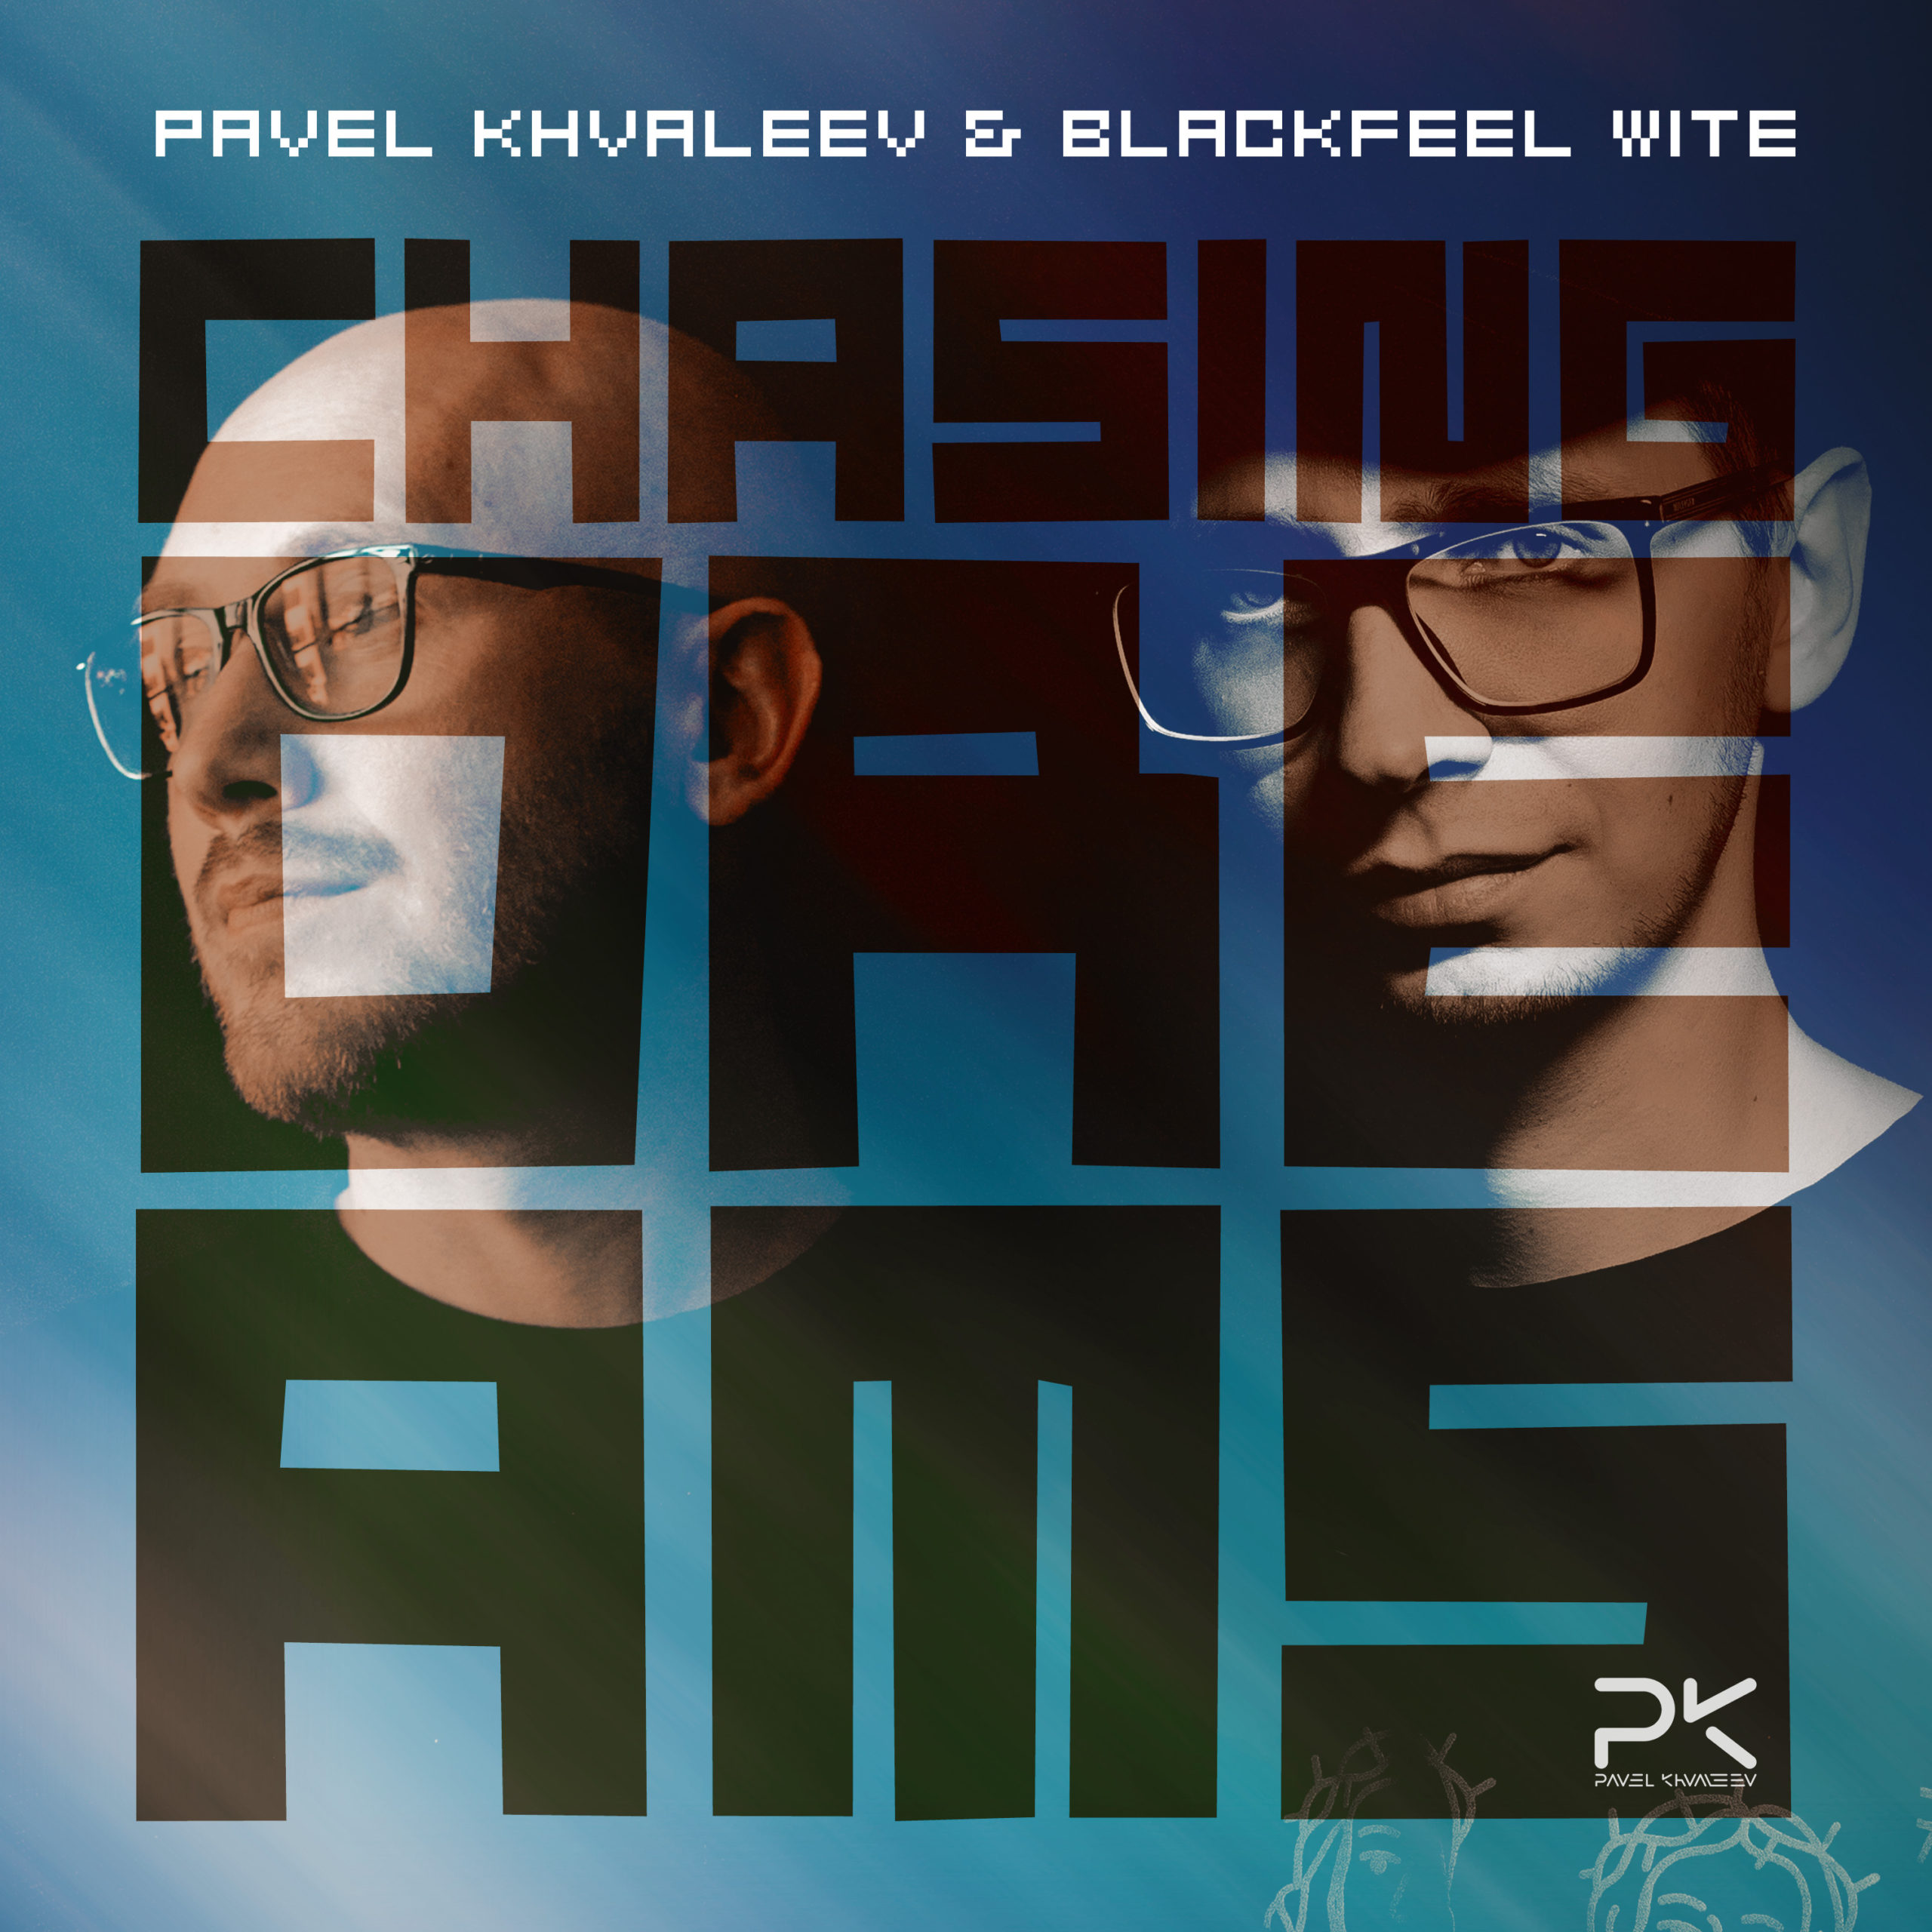 Pavel Khvaleev and Blackfeel Wite presents Chasing Dreams on Black Hole Recordings